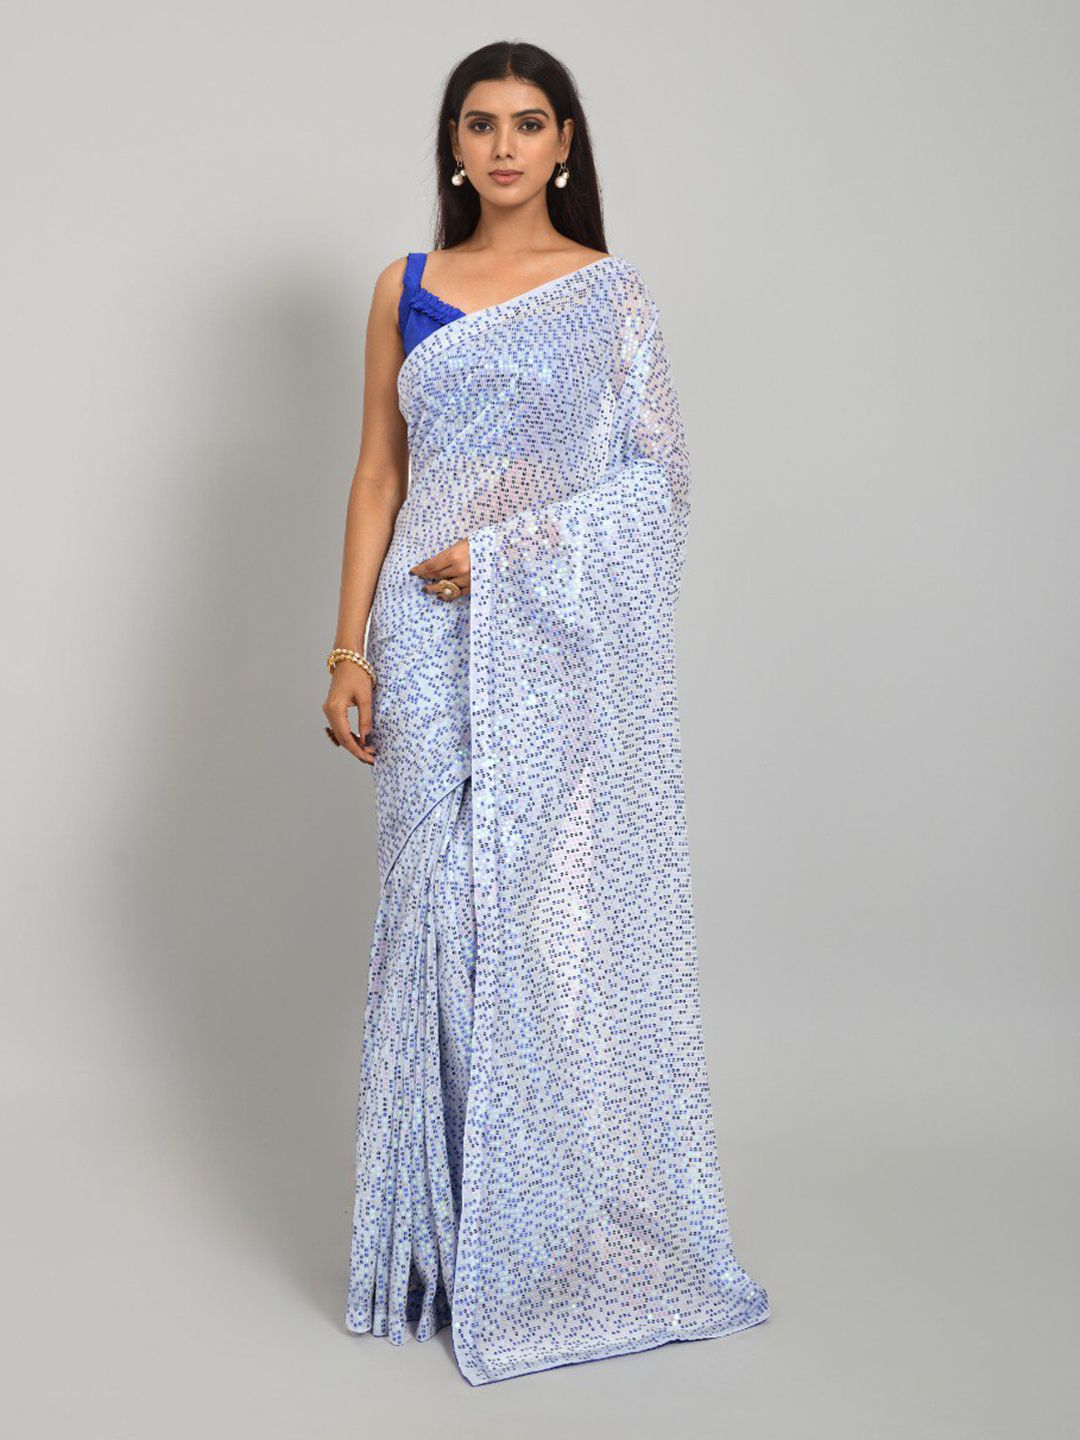 VEERAX Blue Embellished Sequinned Art Silk Saree Price in India